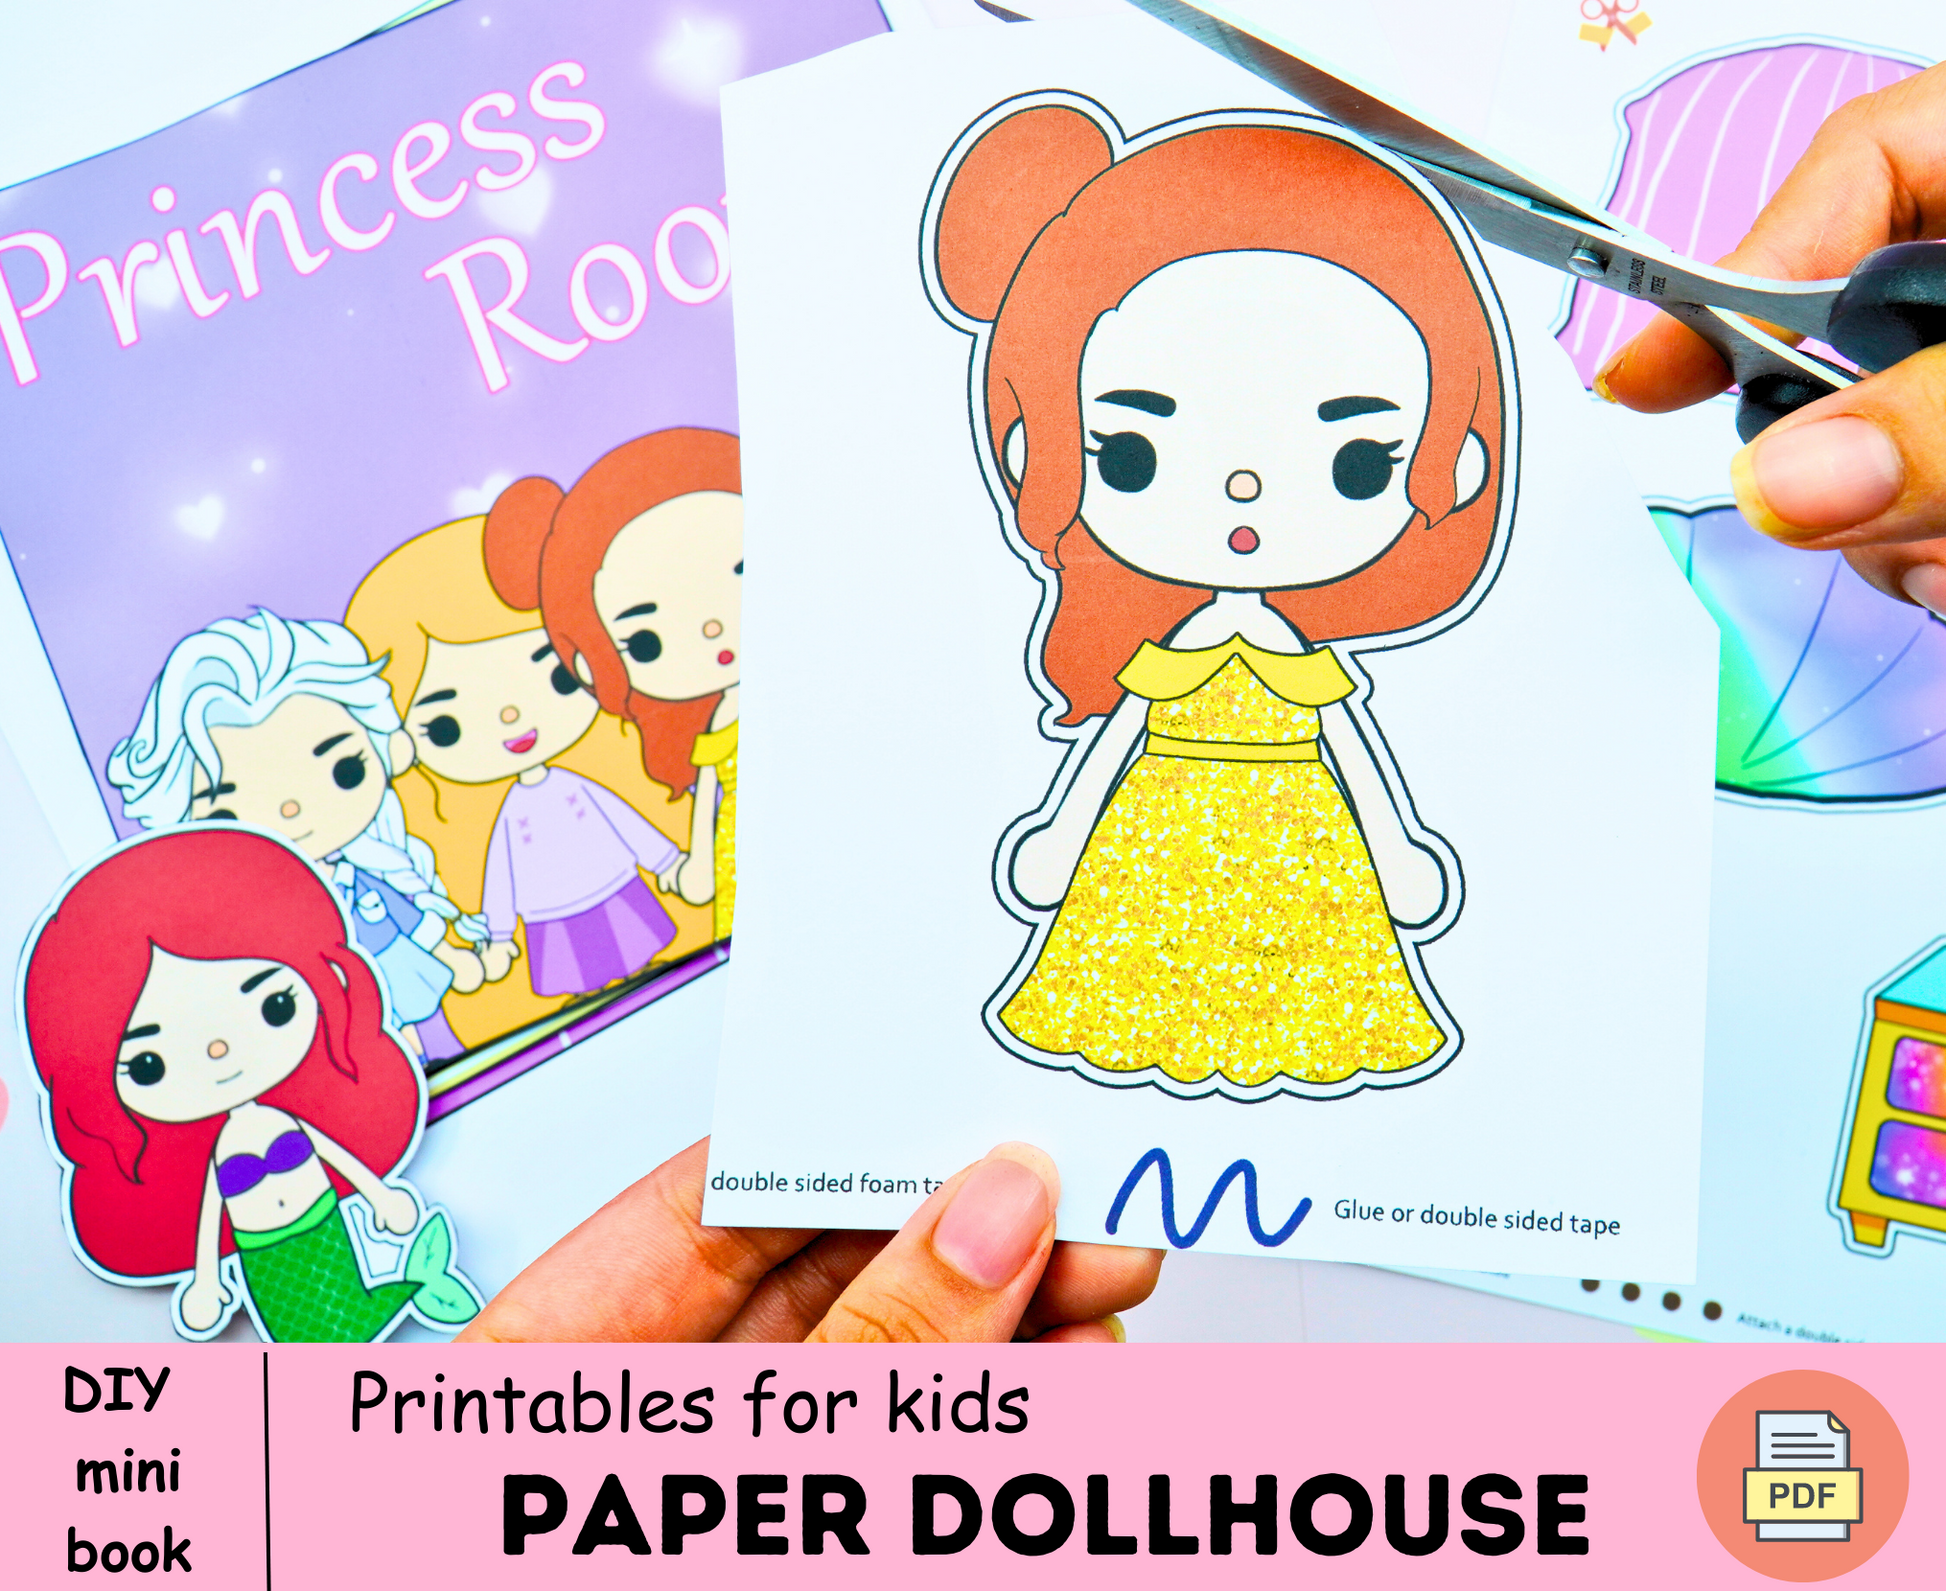 Printable Paper Doll Toca Boca Inspired Quiet Book Kids 